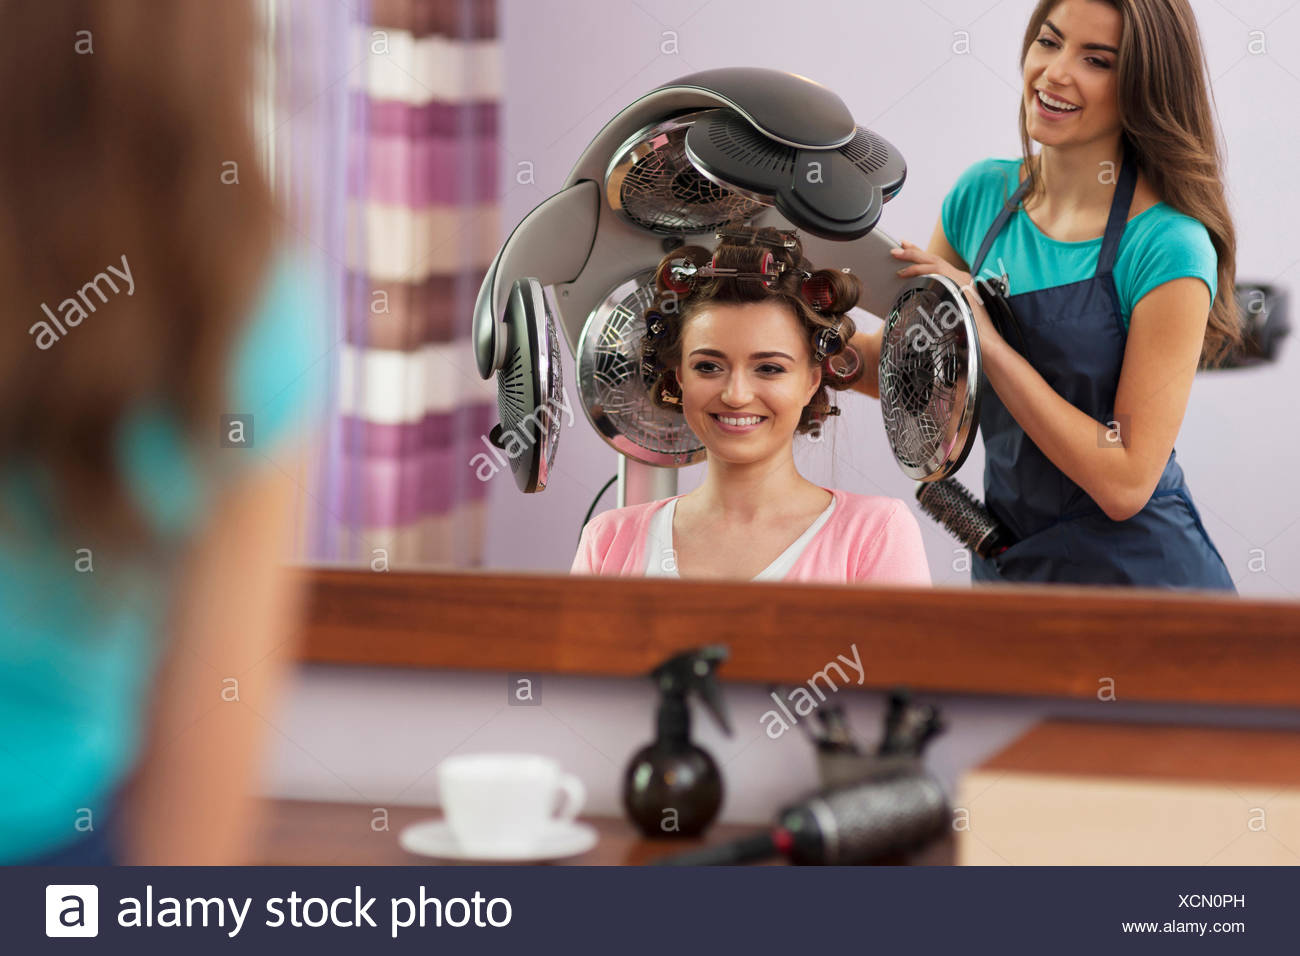 Woman Under Hair Dryer Stock Photos